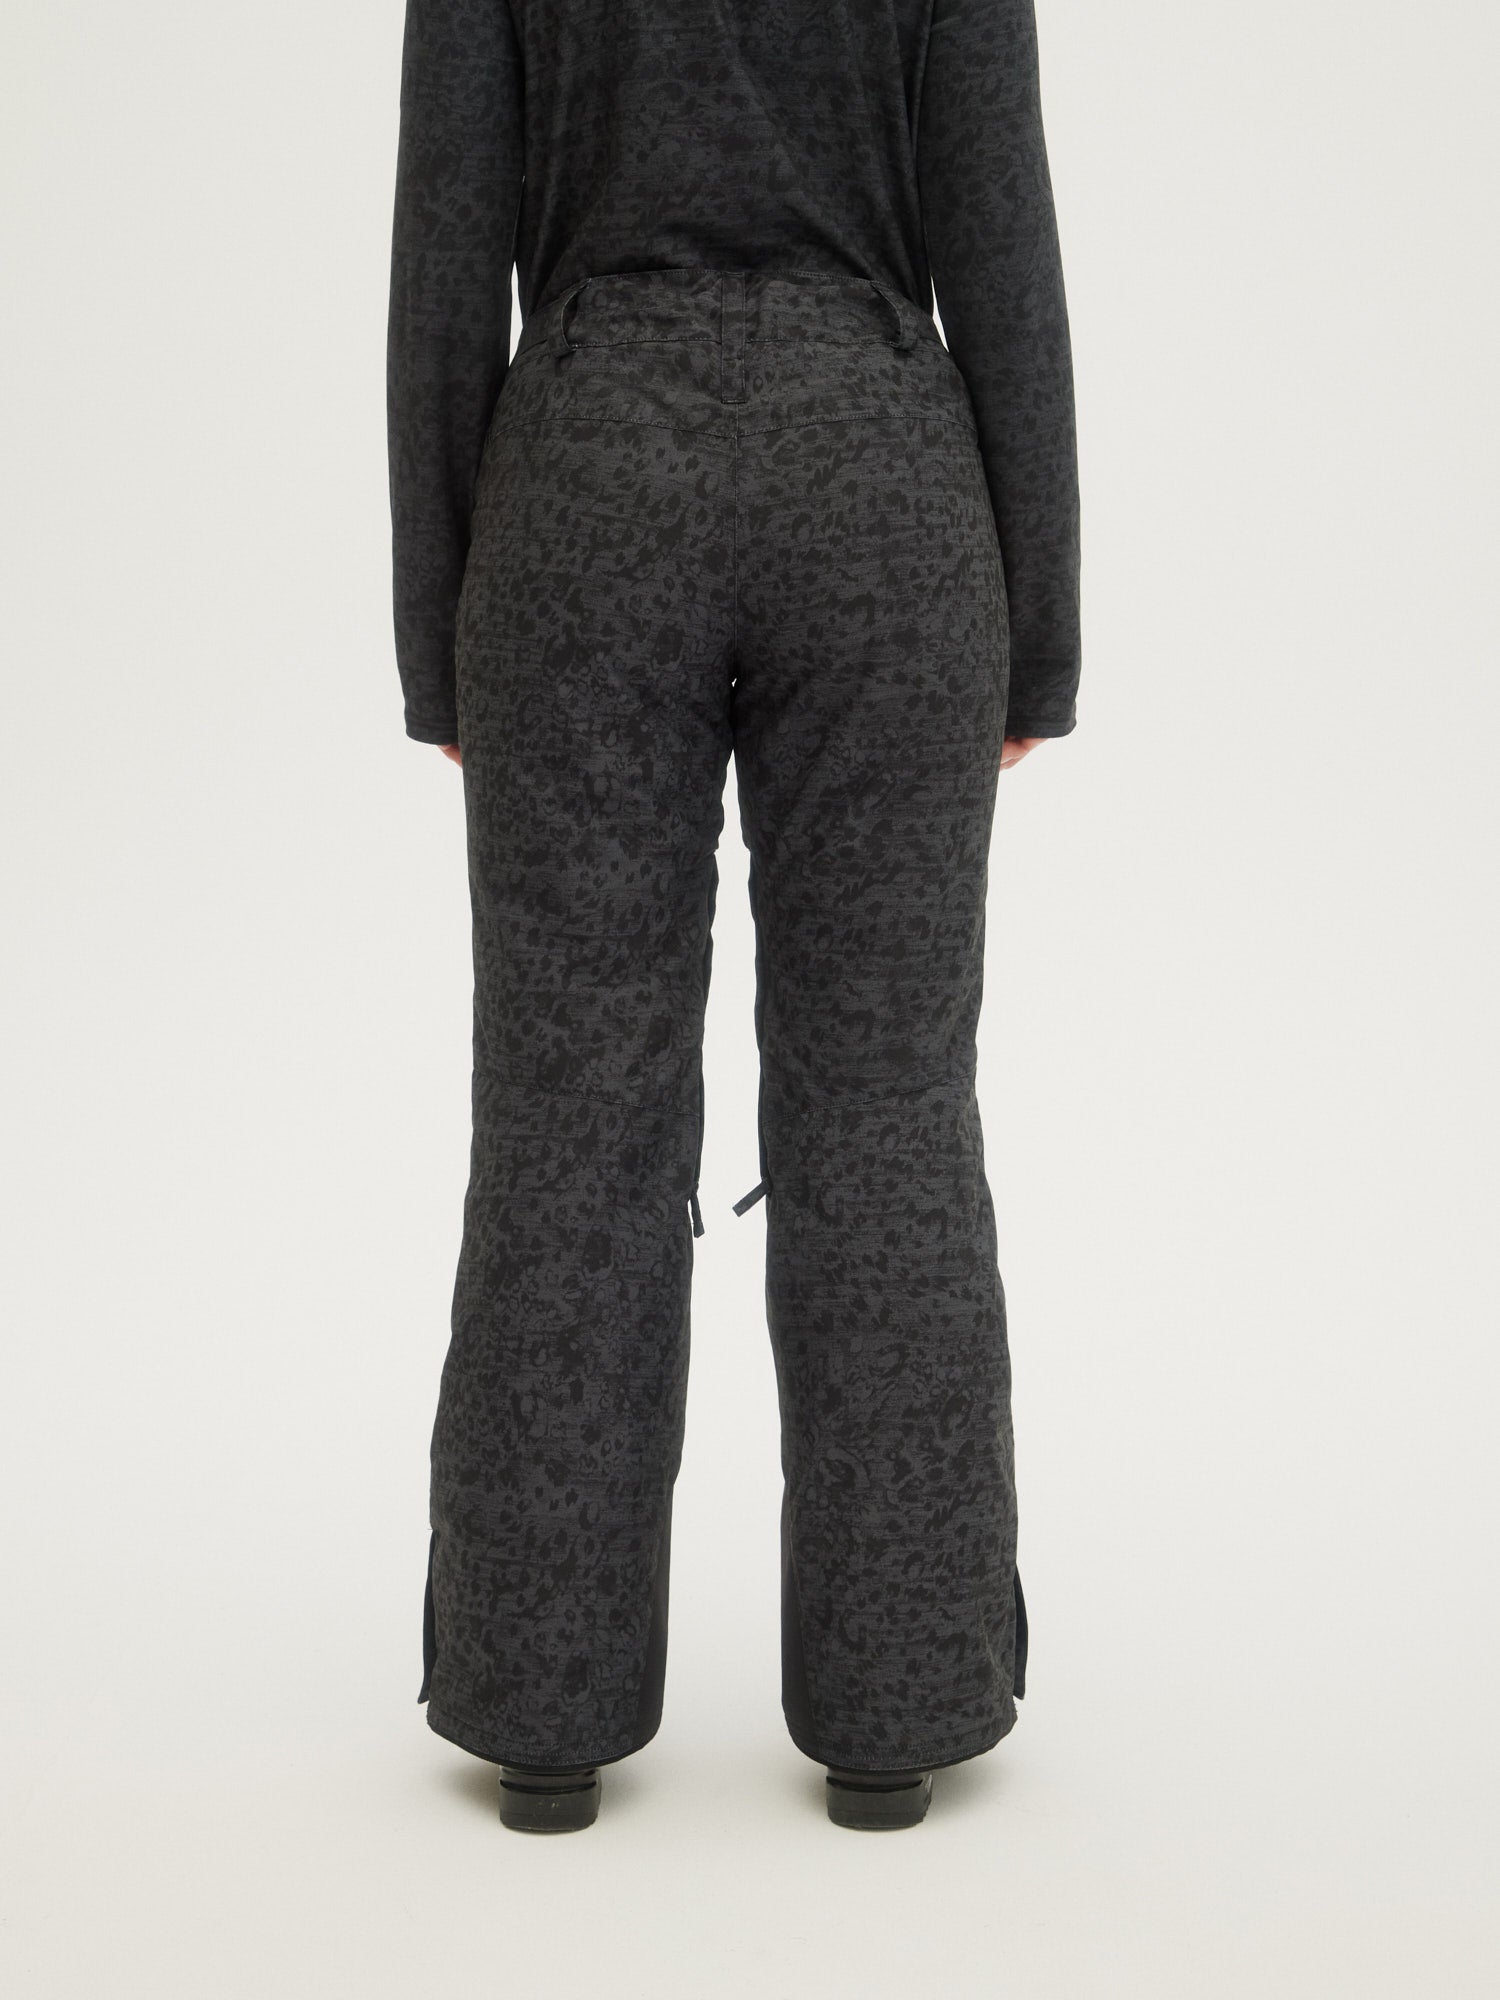 JML Hollywood Pants: Slimming, glamorous in PO13 Gosport für £ 10